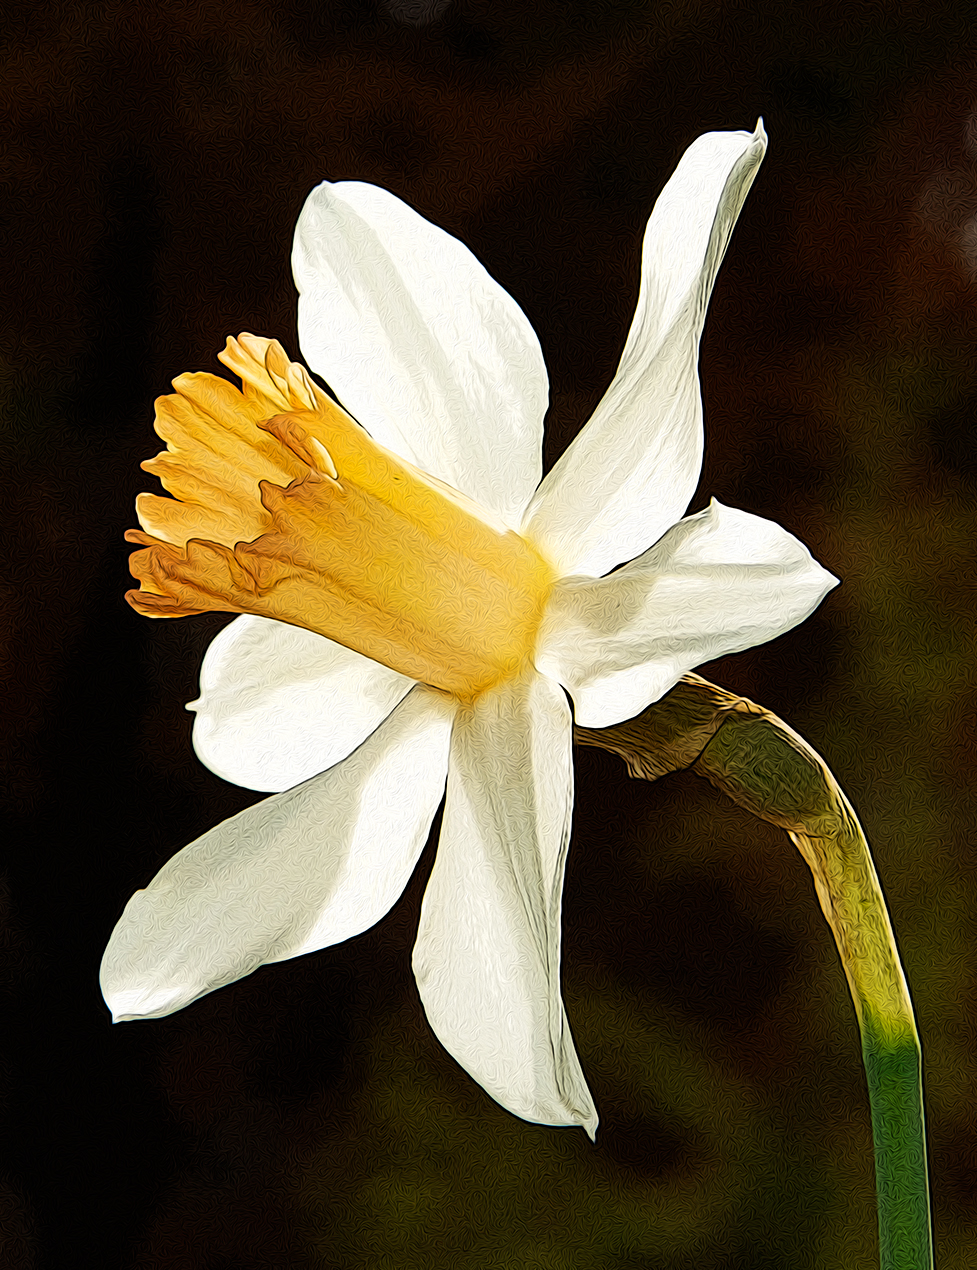 The Narcissus Geranium aka Tazetta Daffodil at 3 Dog Acres in the rural Ozark Highlands of Arkansas on 7 April 2022